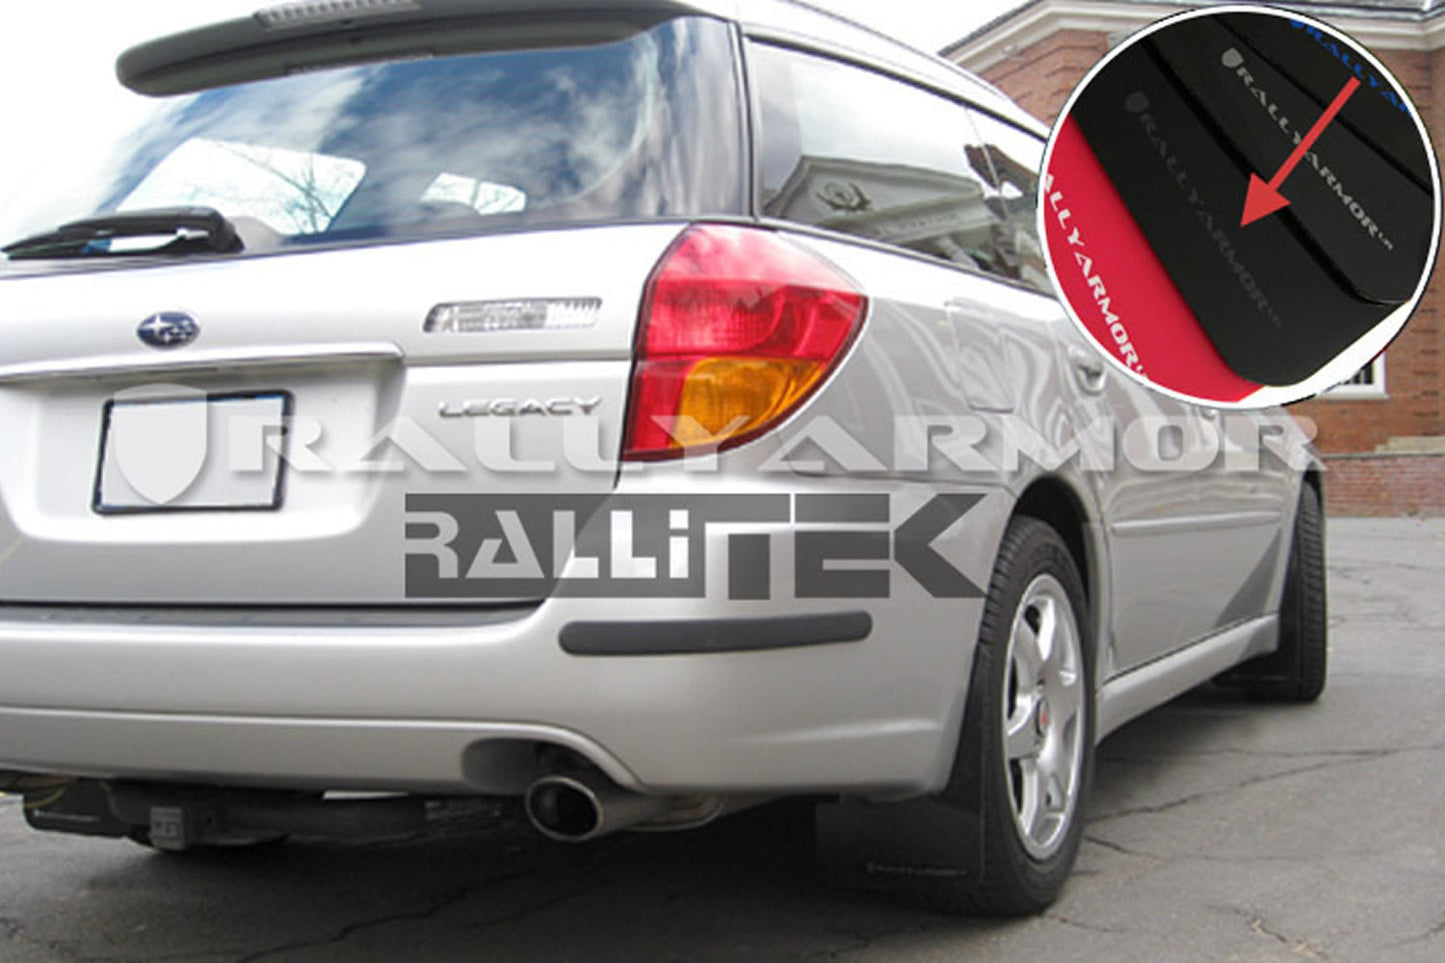 Rally Armor UR Mud Flaps - Fits Subaru Legacy & Outback 2005-2009